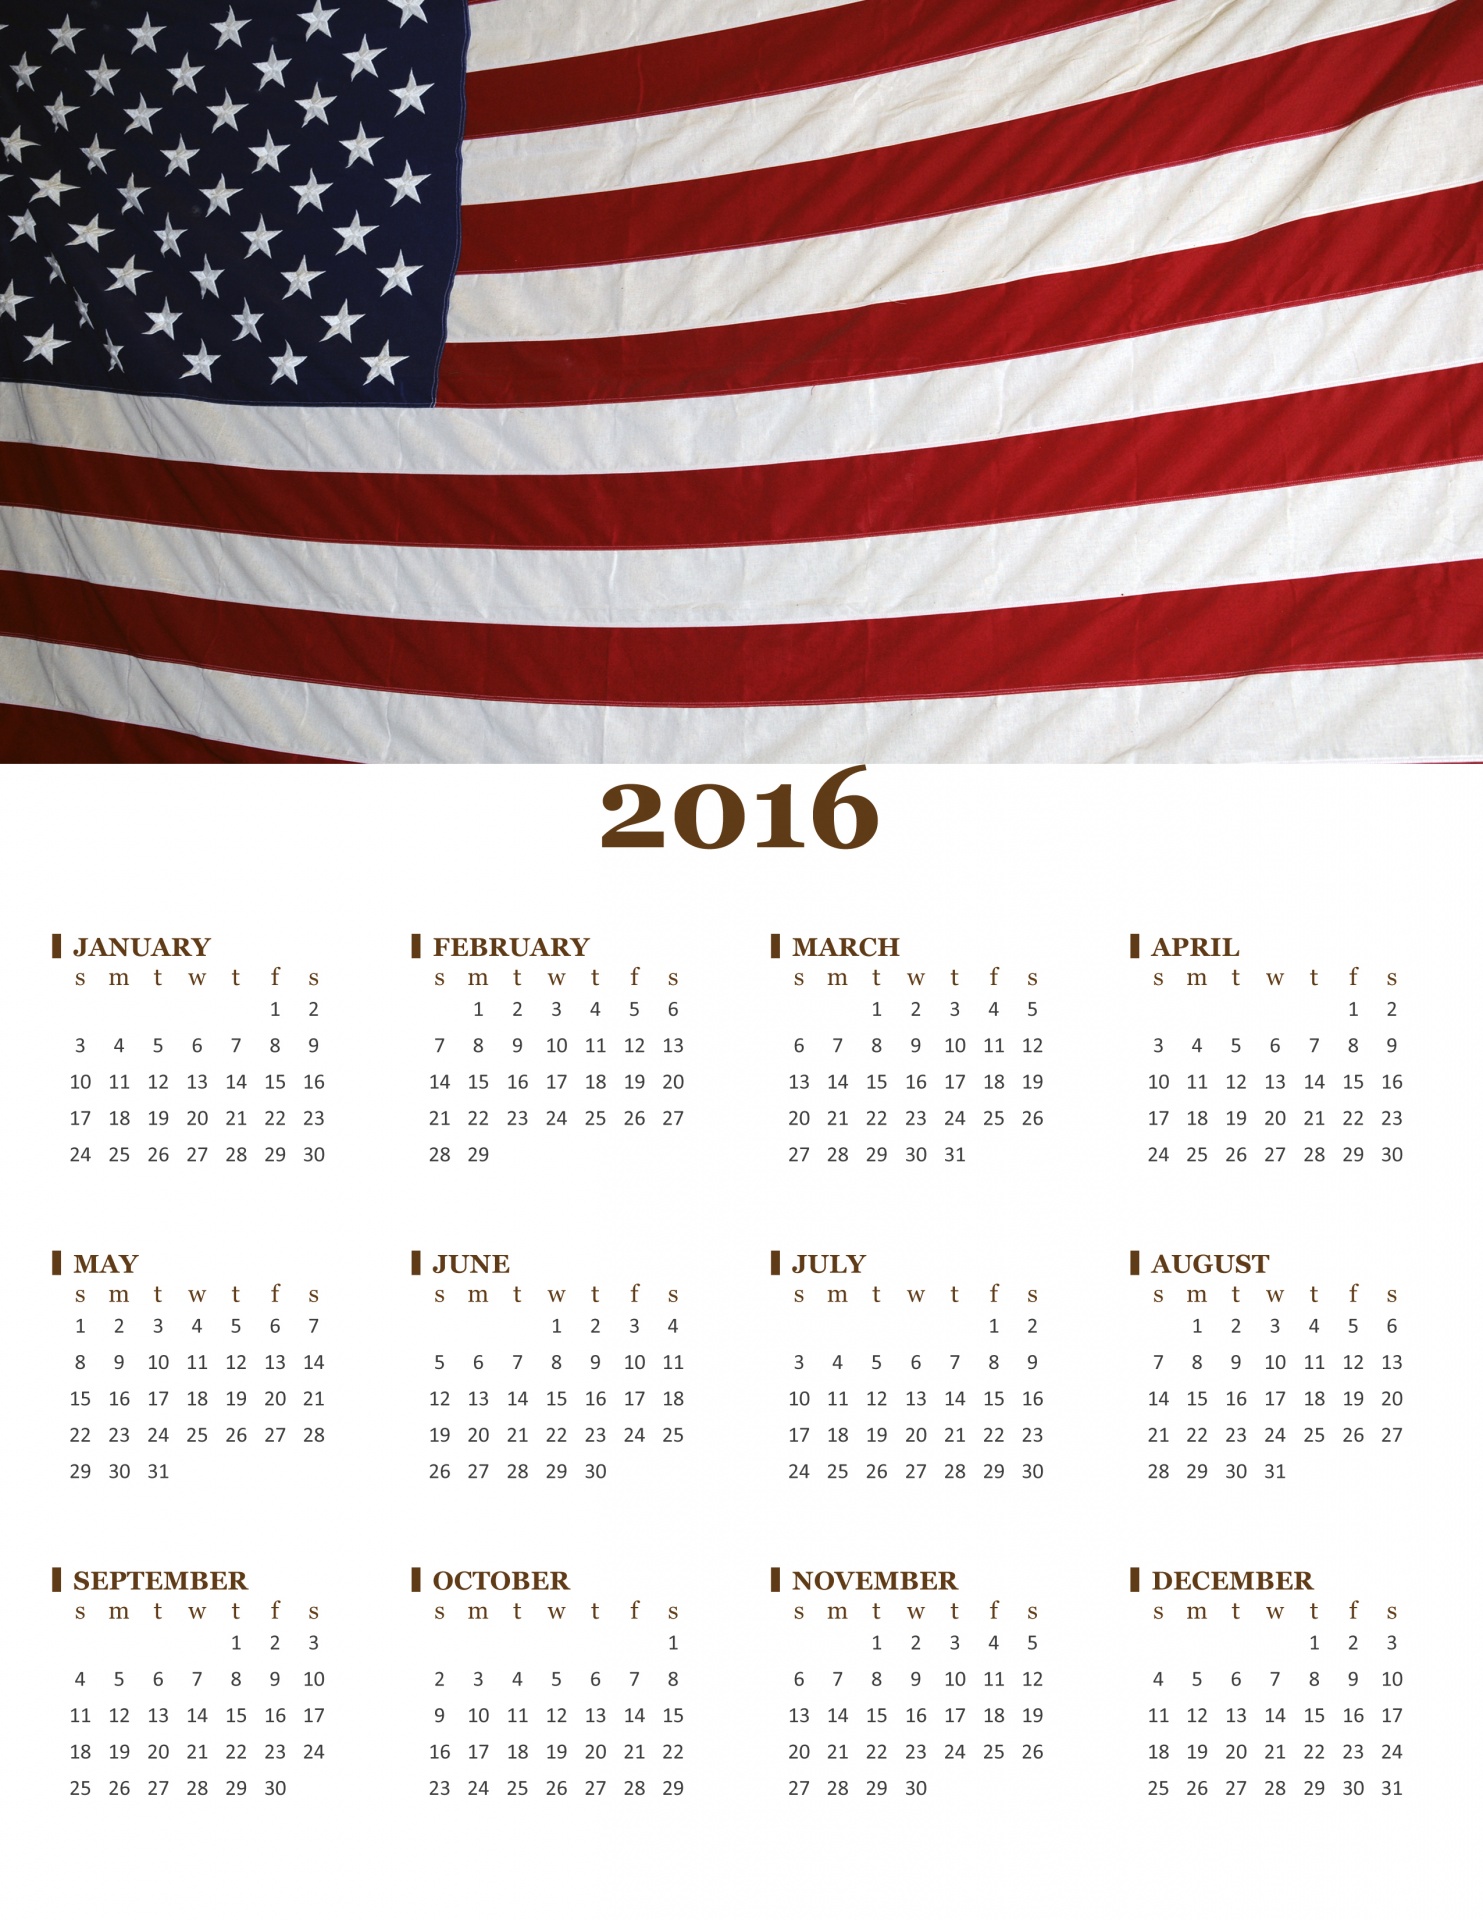 2016-annual-american-flag-calendar-free-stock-photo-public-domain